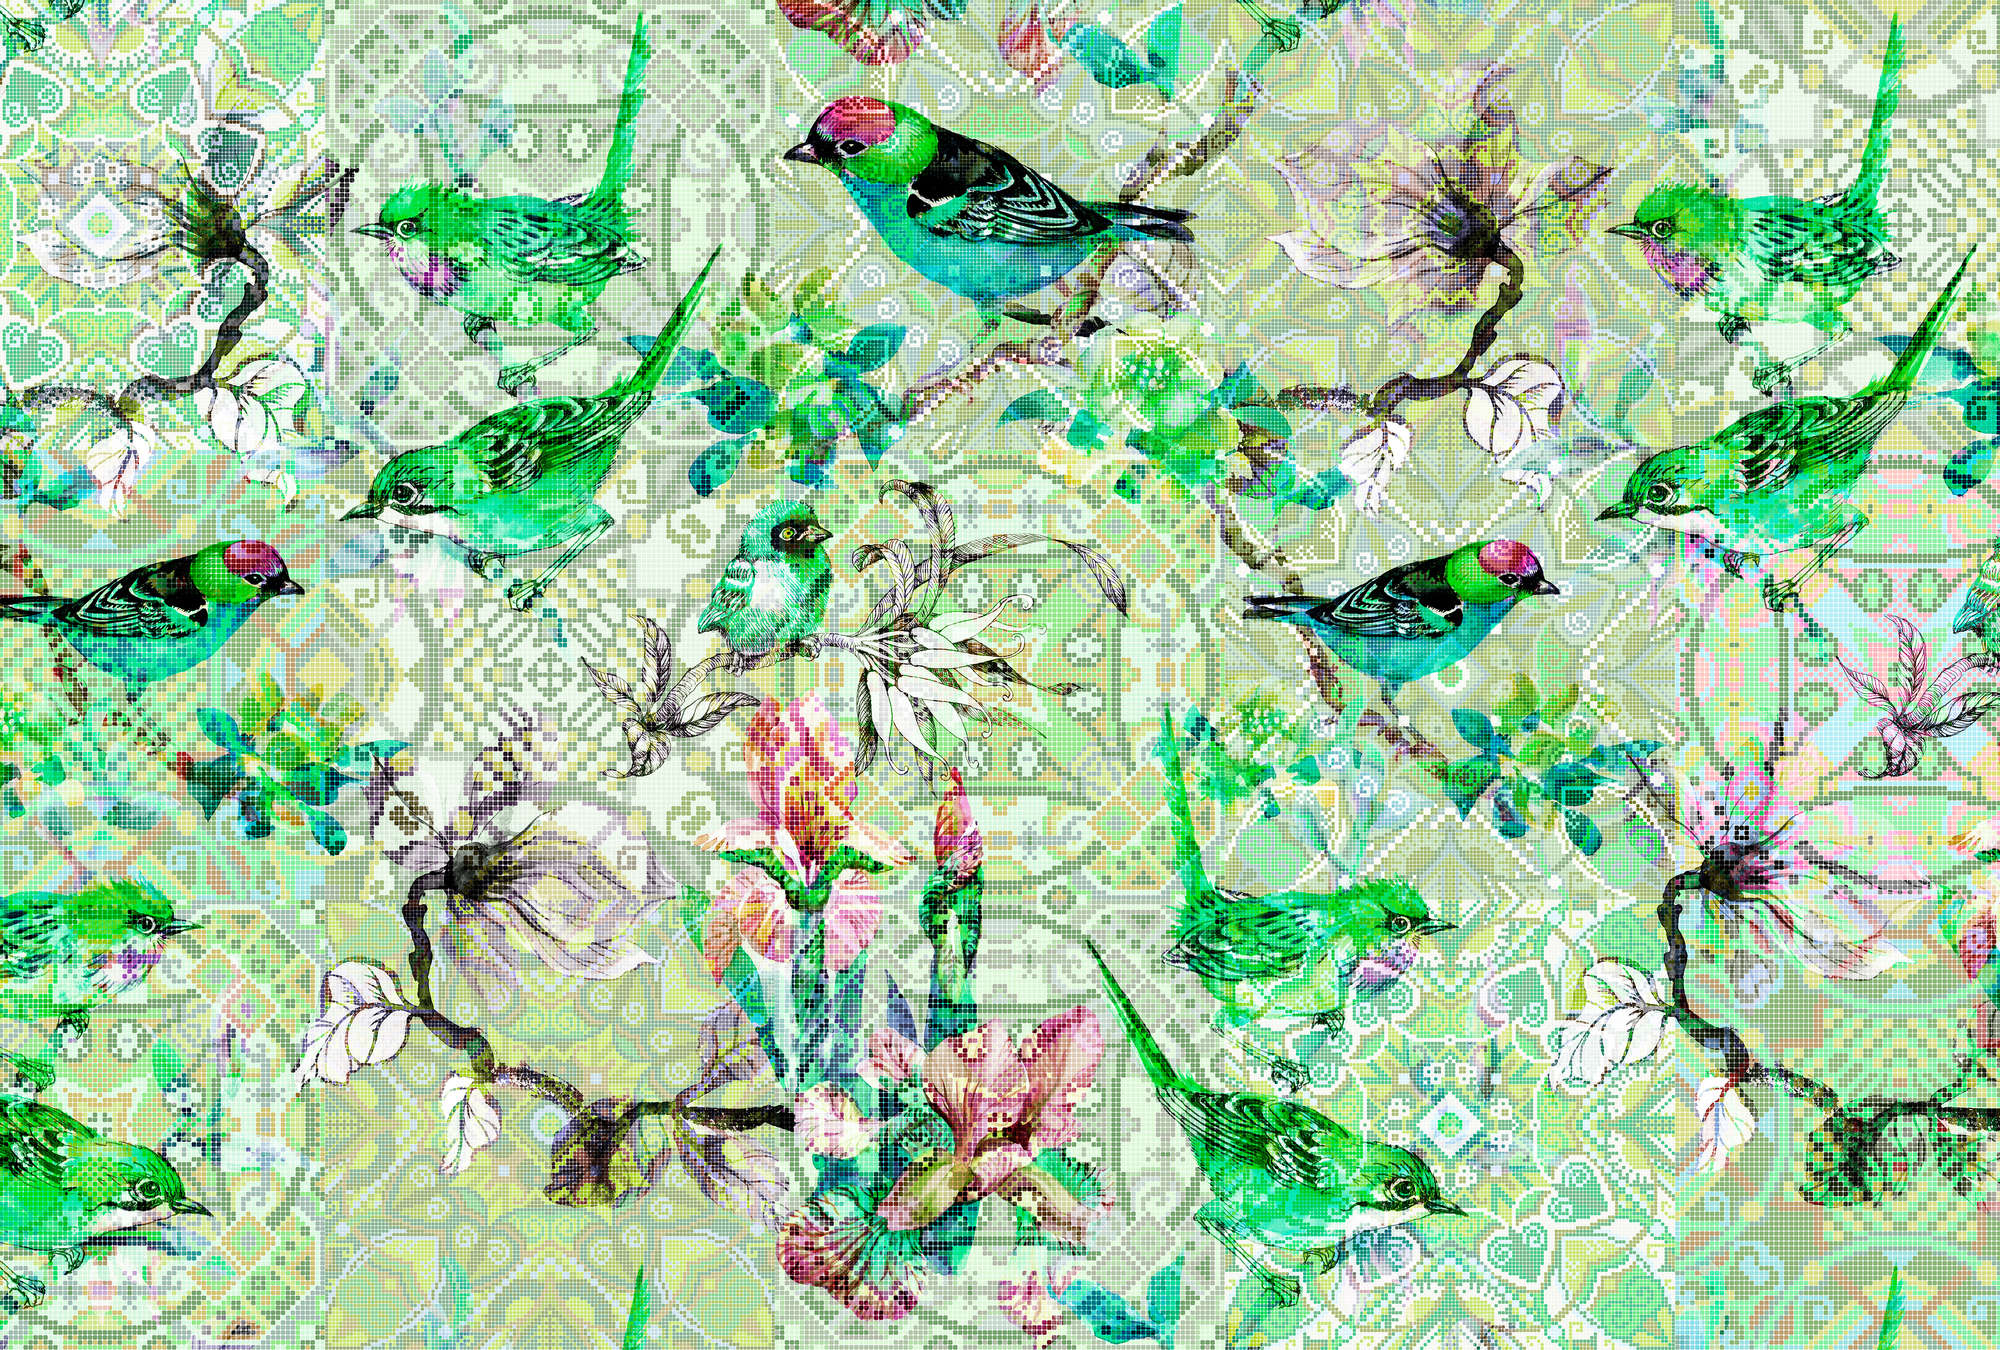             Bird mural green with mosaic pattern - Green, Pink
        